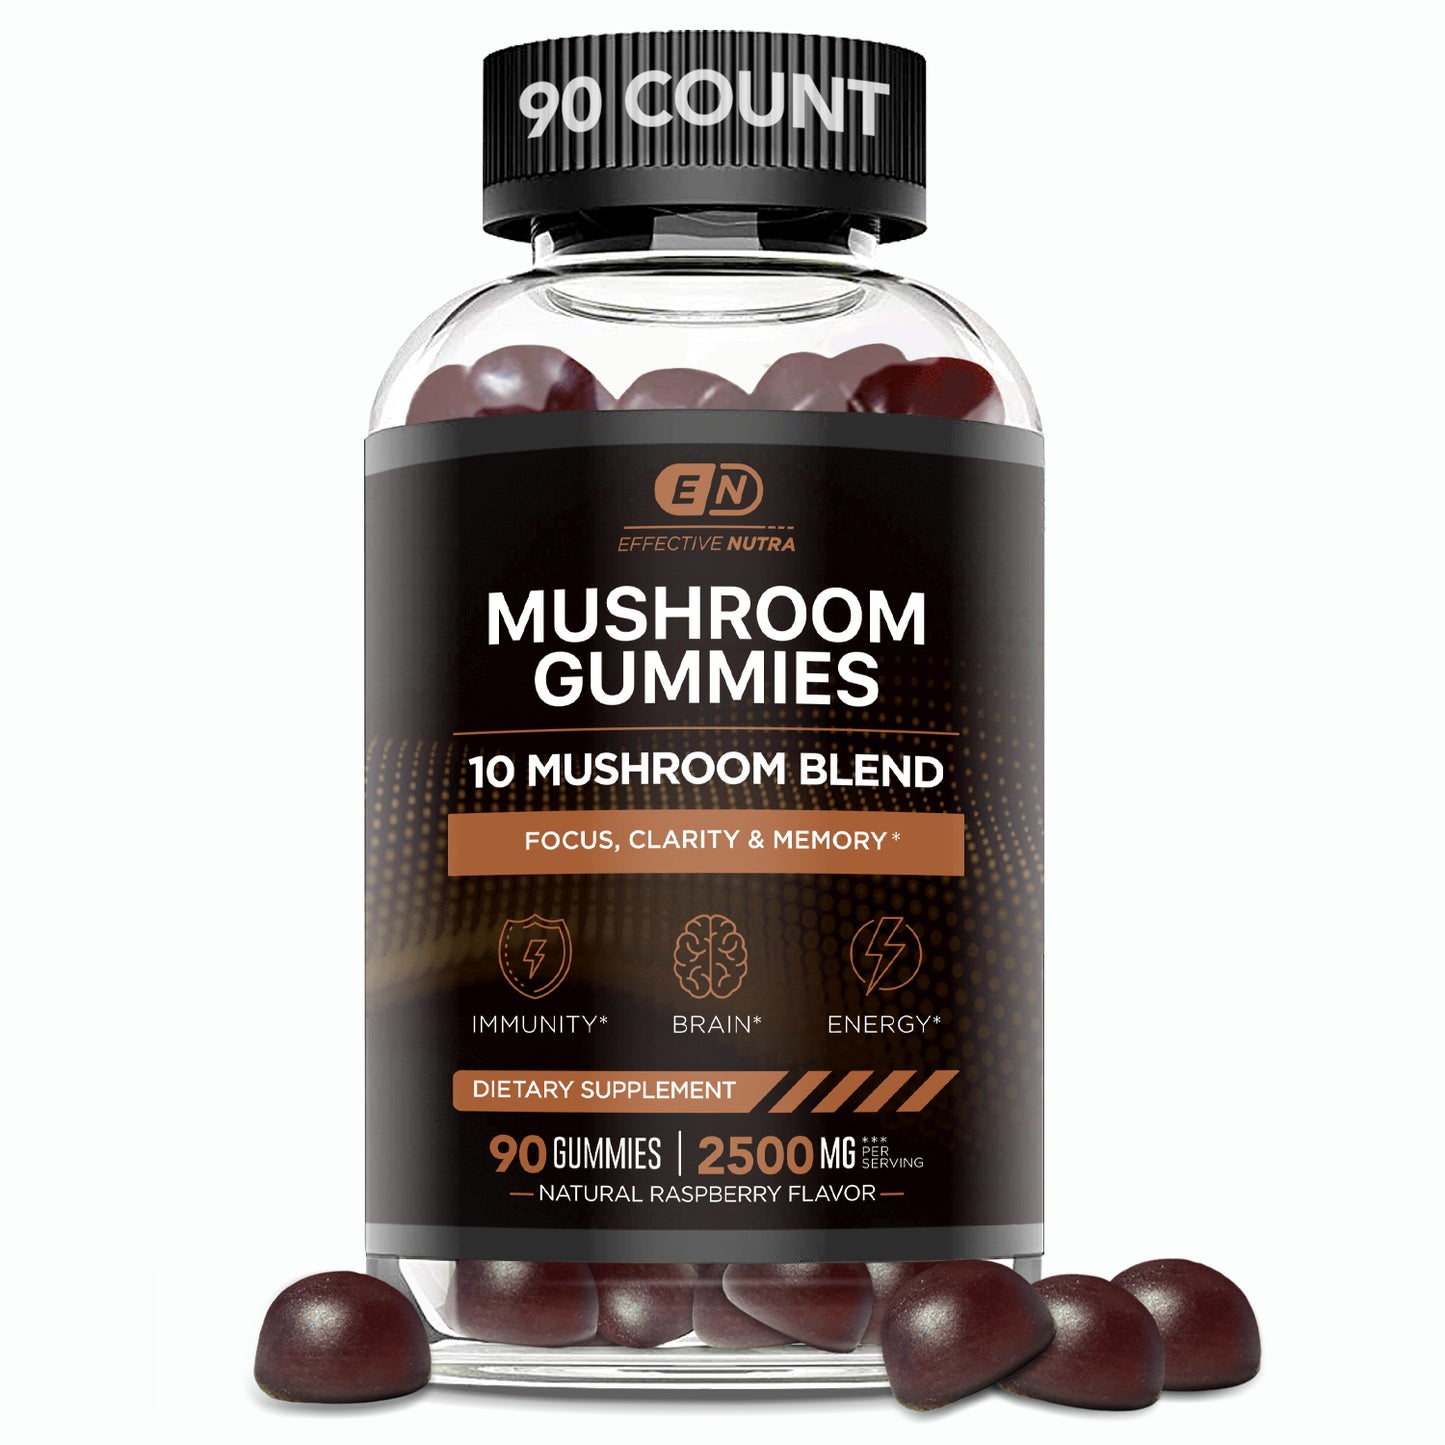 Mushroom Gummies 2500mg, 10-Blend (90 Count)